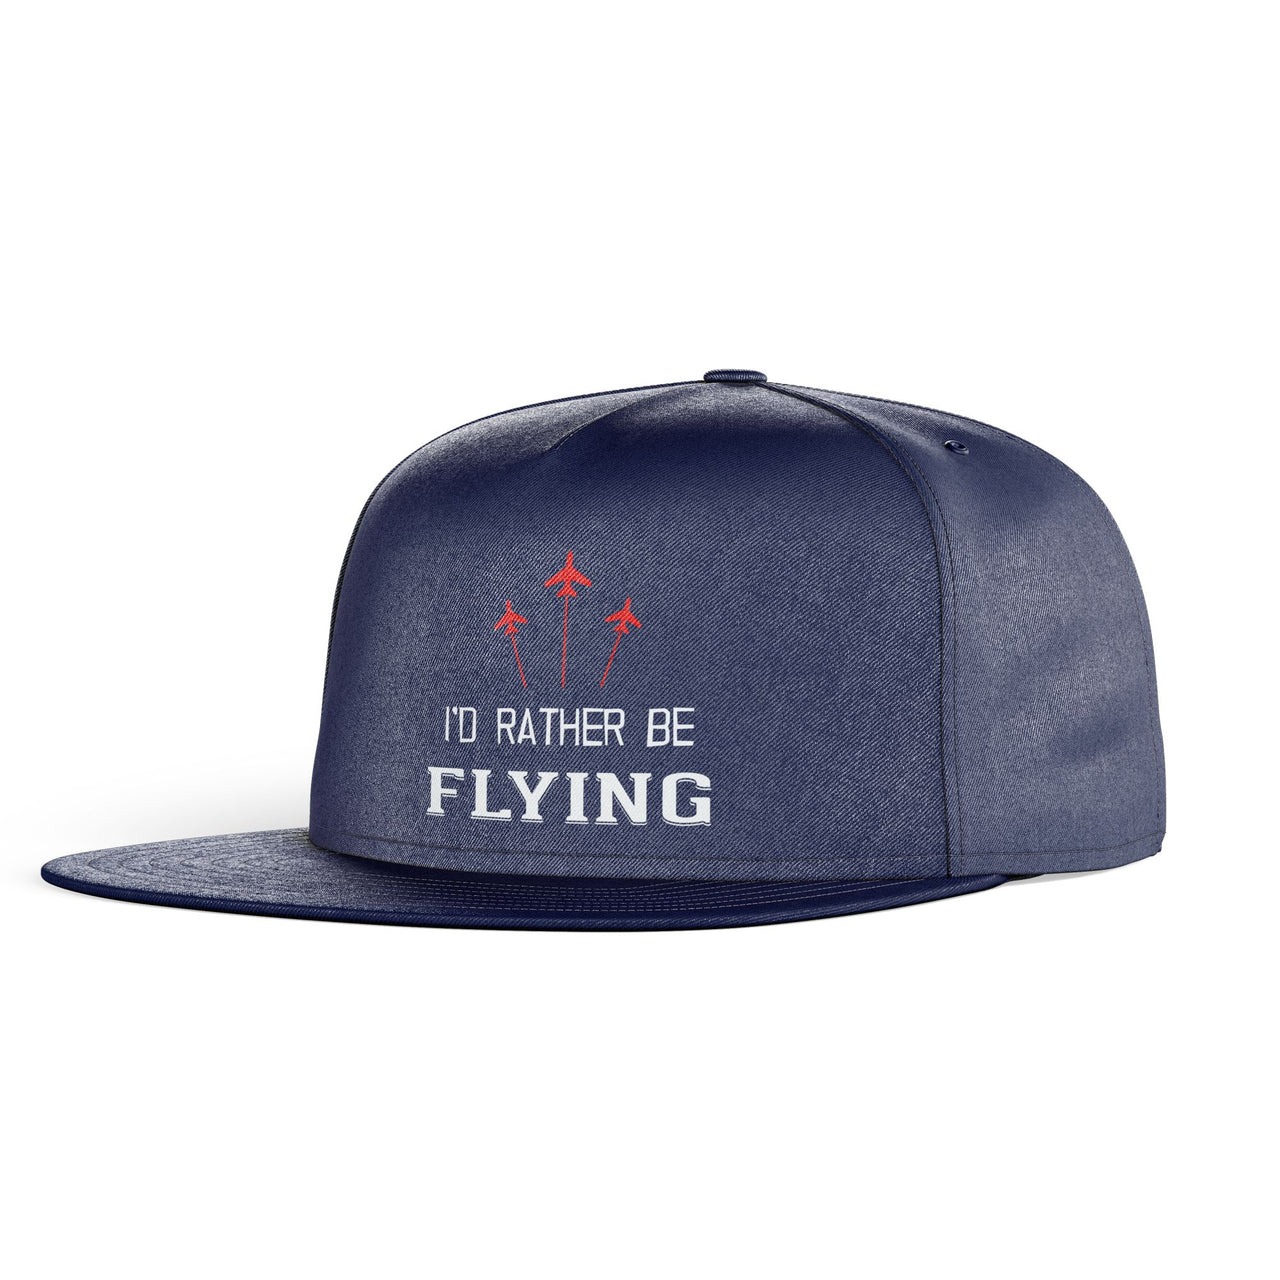 I'D Rather Be Flying Designed Snapback Caps & Hats